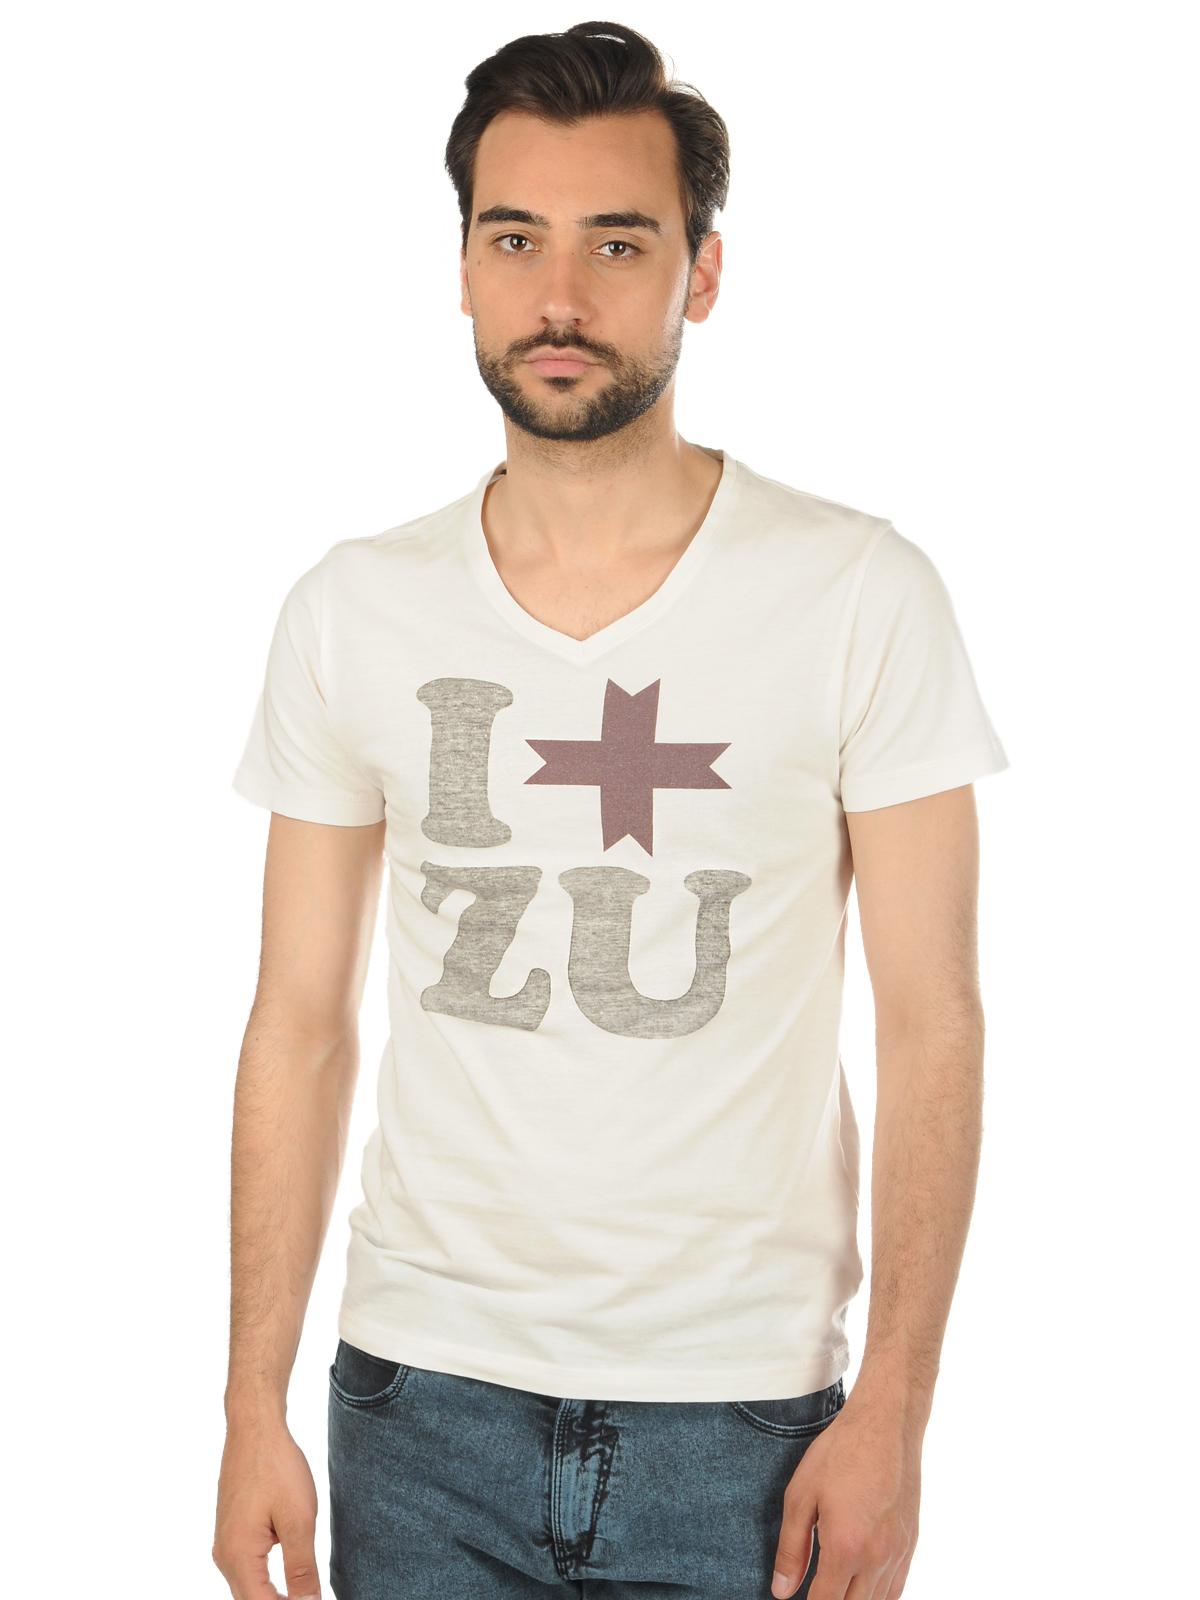 Foto Zu Elements Camiseta crema combinado XL foto 900591